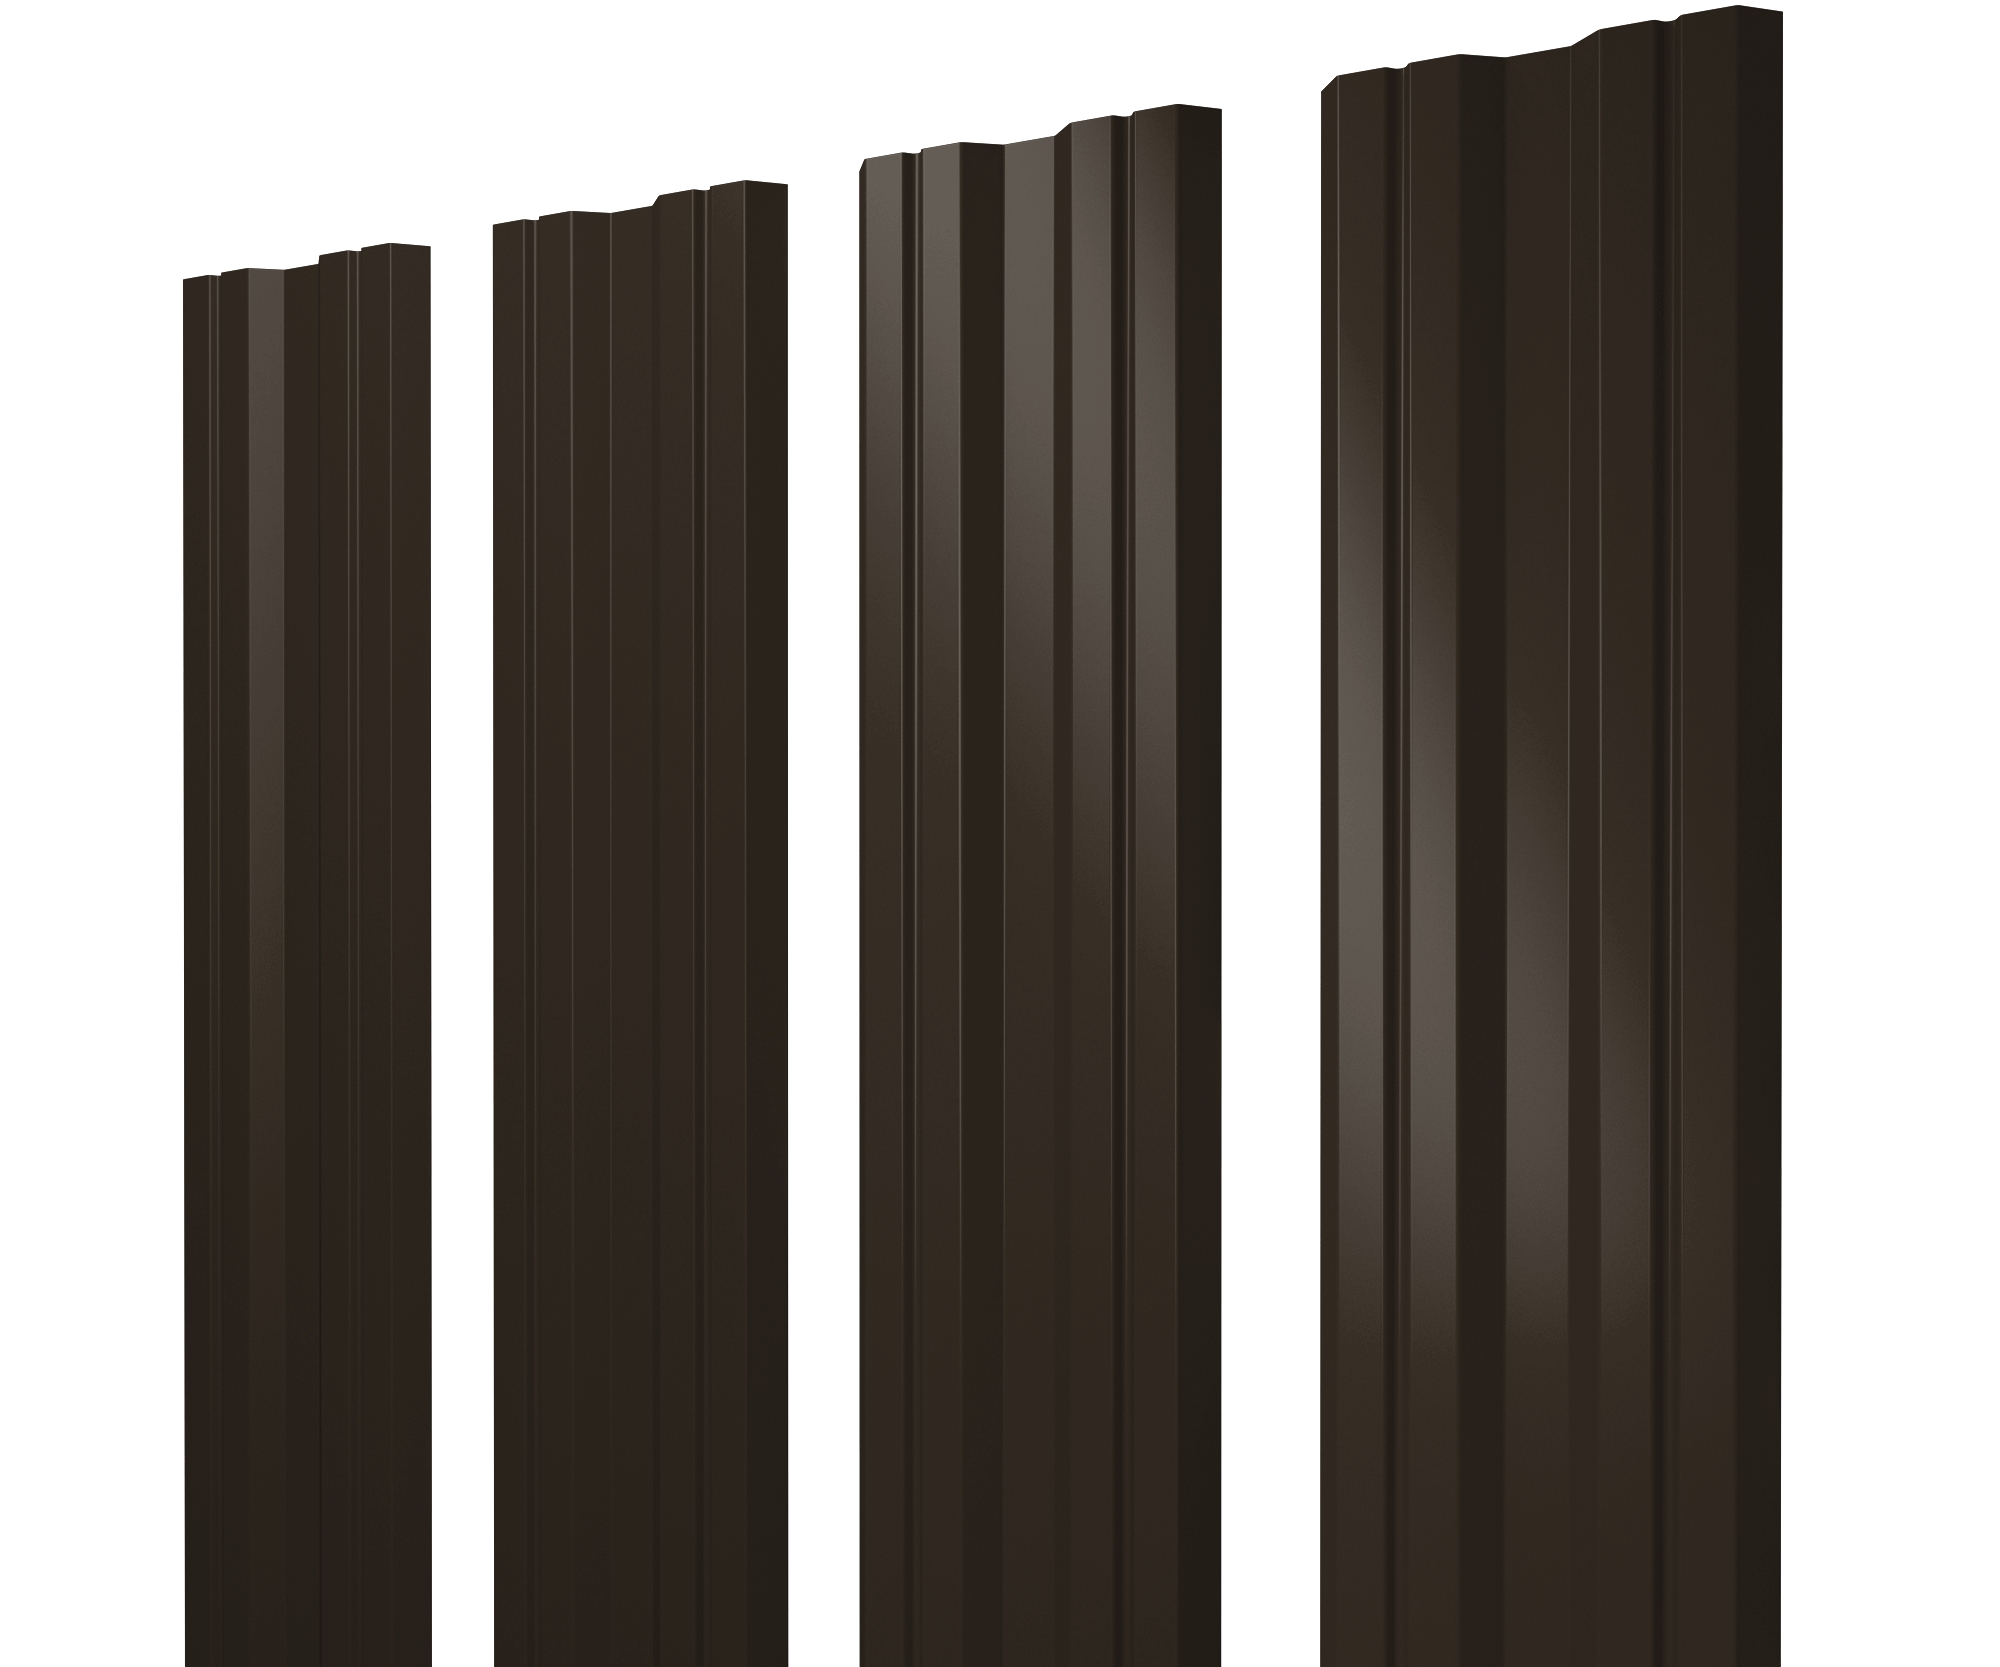 Штакетник Twin 0,5 GreenCoat Pural BT, matt RR 32 темно-коричневый (RAL 8019 серо-коричневый)